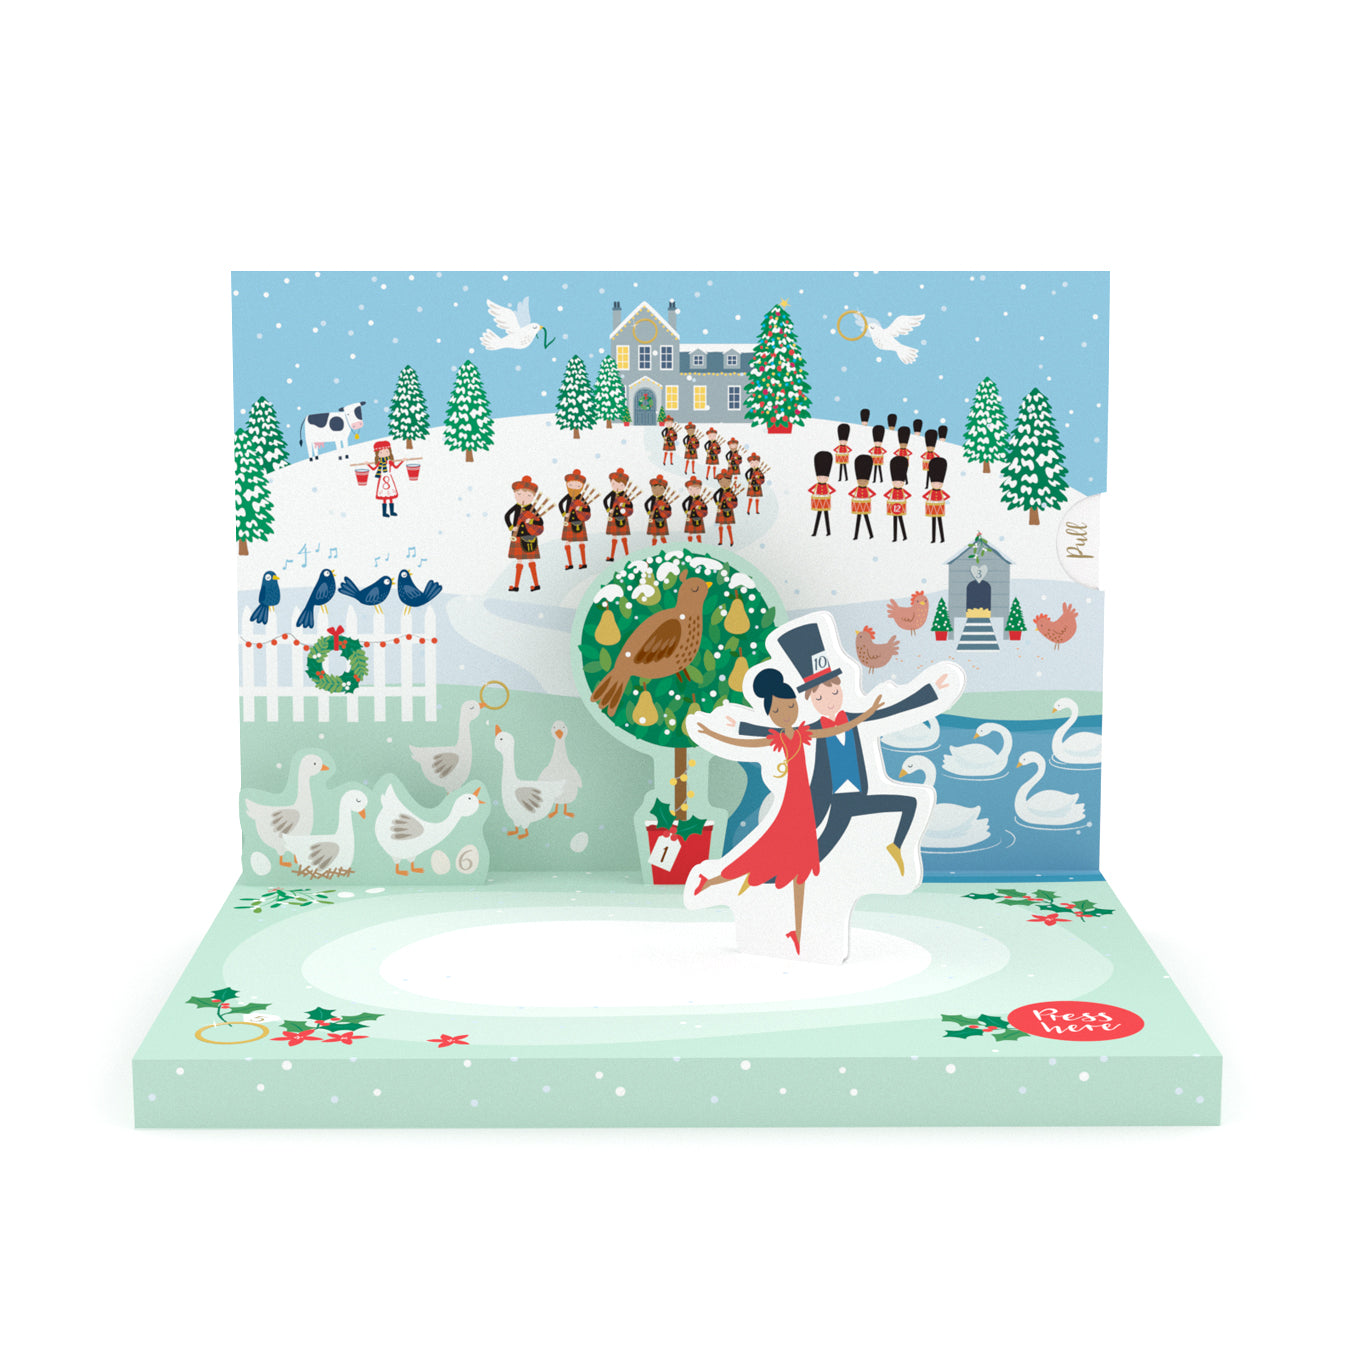 The 12 Days Of Christmas Music Box Card Novelty Dancing Musical Christmas Card